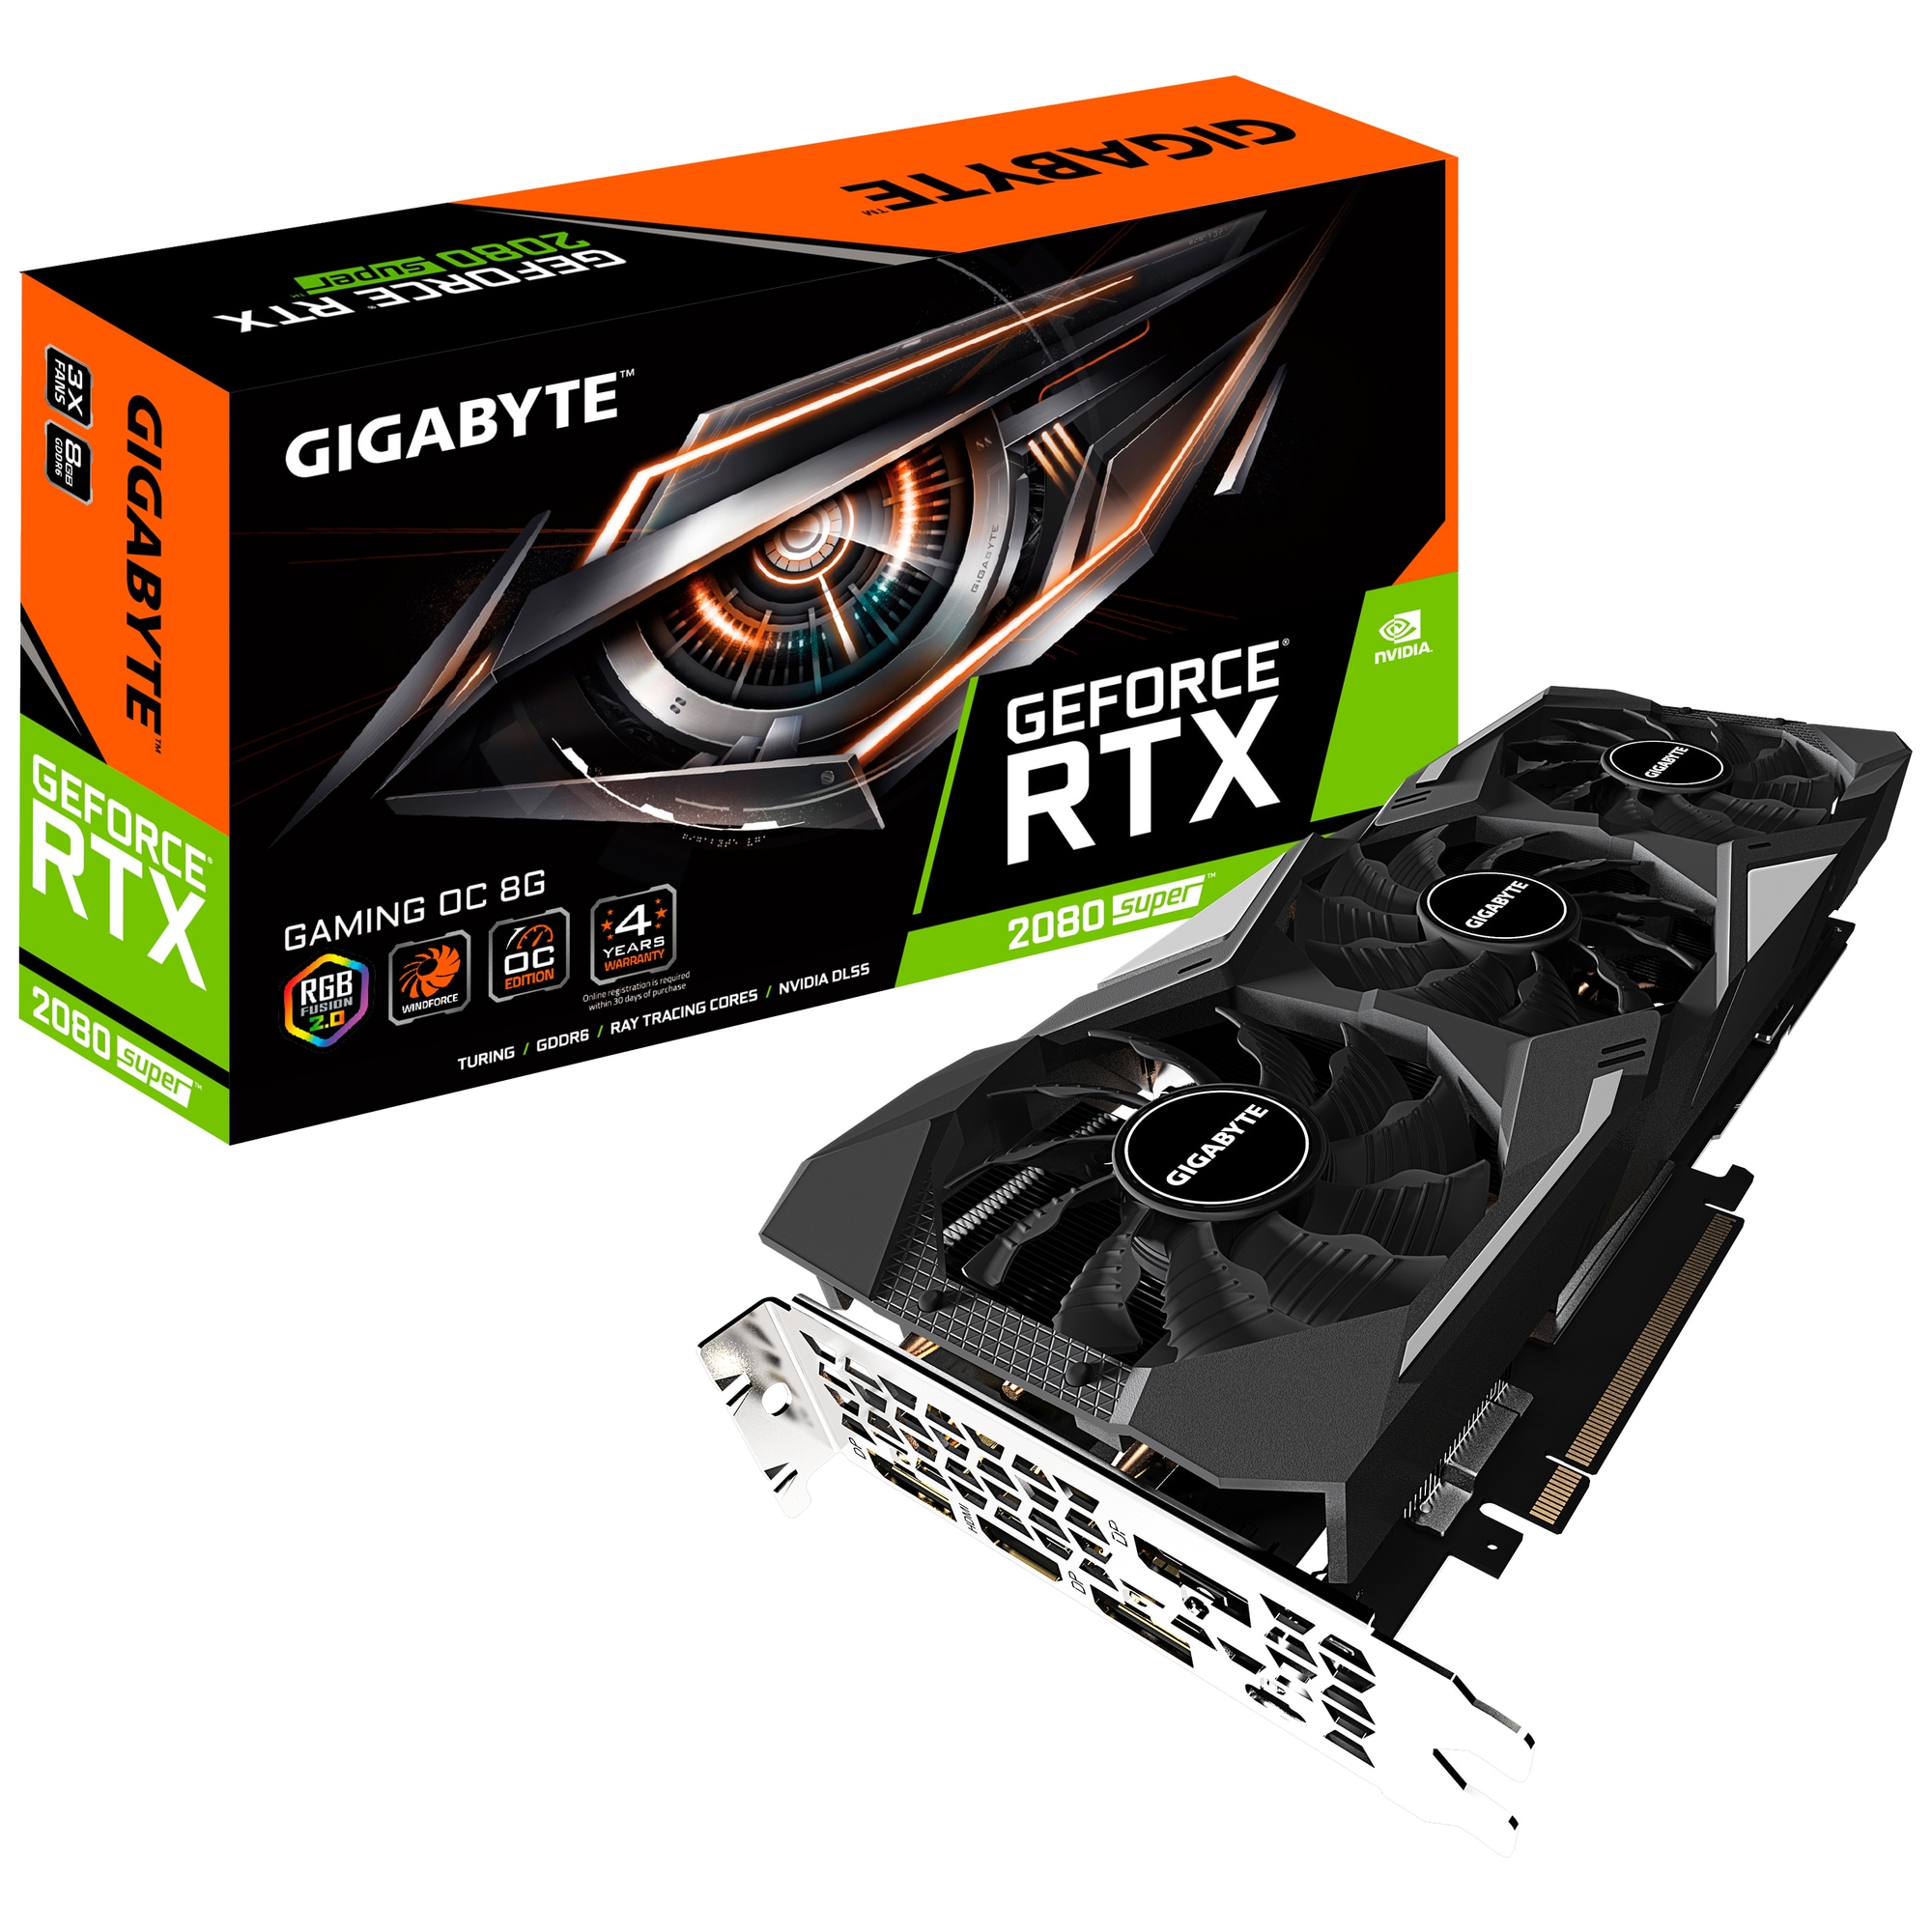 Gigabyte GeForce RTX 2080 Super Gaming OC grafikkort 8G | Elgiganten